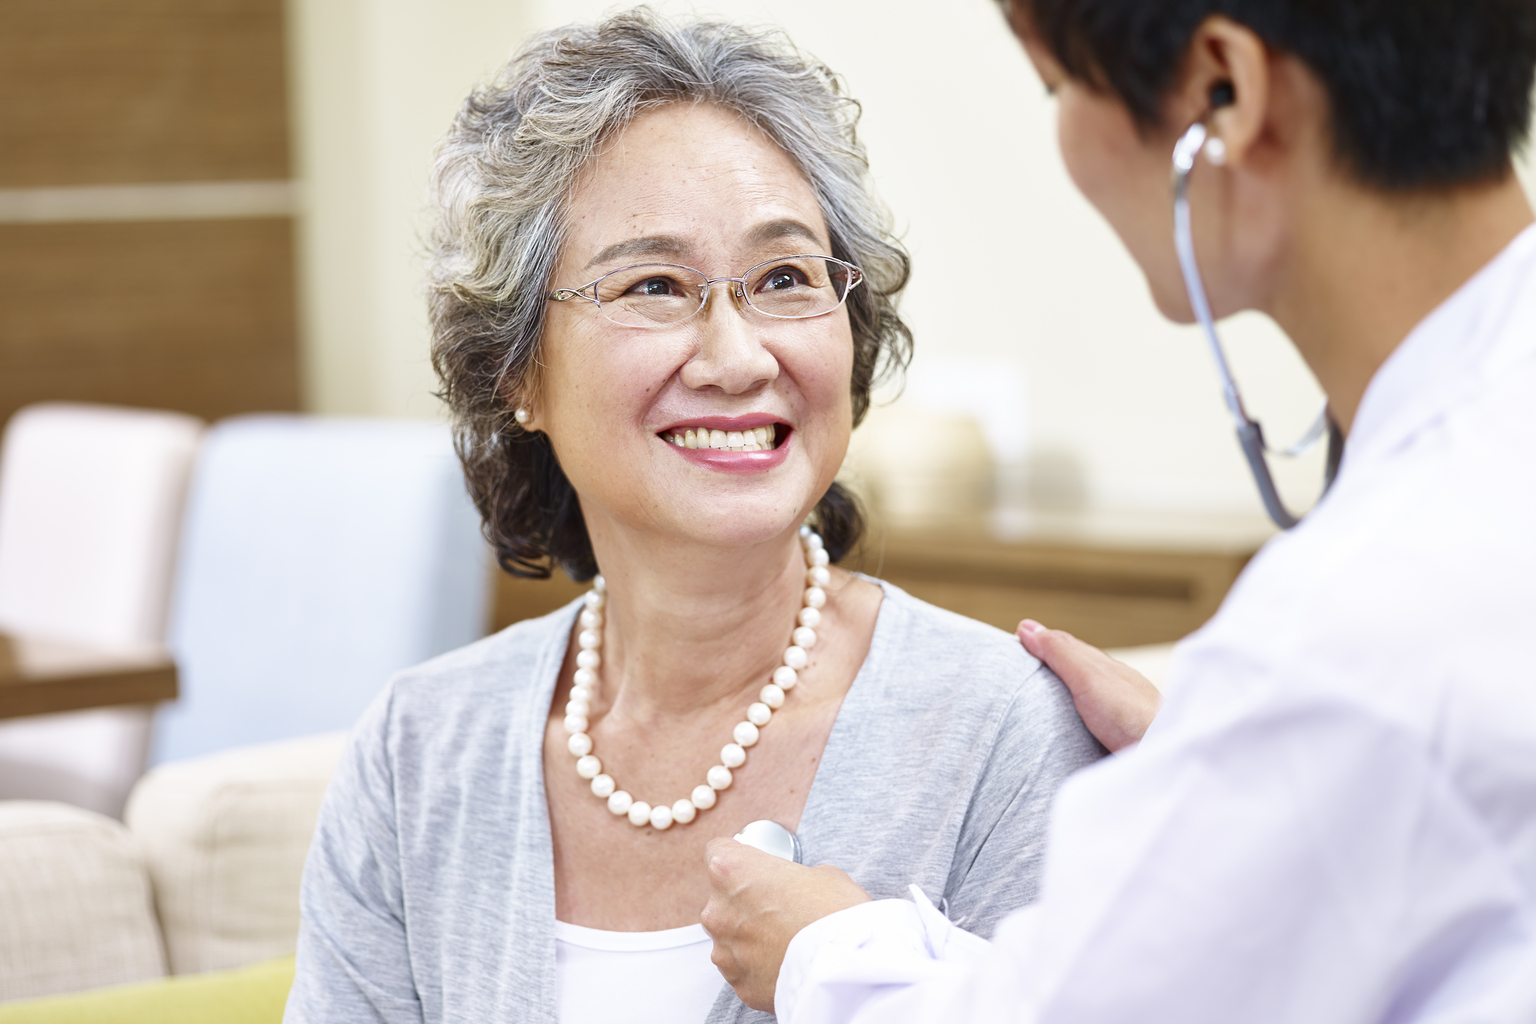 Family doctor checking smiling senior Asian woman using stethoscope